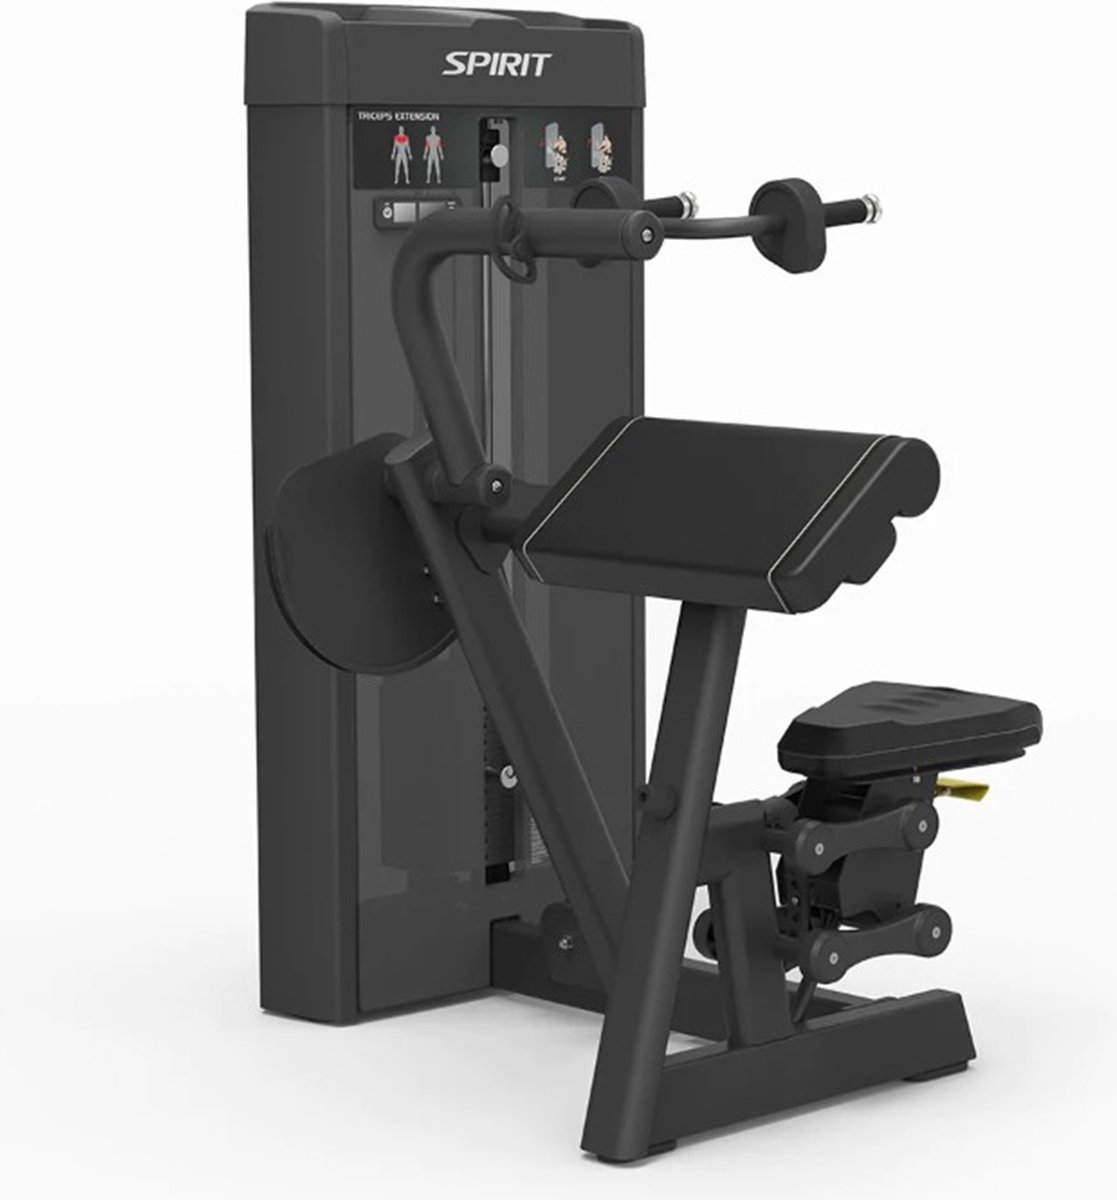 Spirit Fitness SP-4308 - Triceps Extension Machine - Steekgewichten / Selectorized - ruimtebesparend ontwerp - geïntegreerde rep-teller - volledig verstelbaar - voor professioneel gebruik